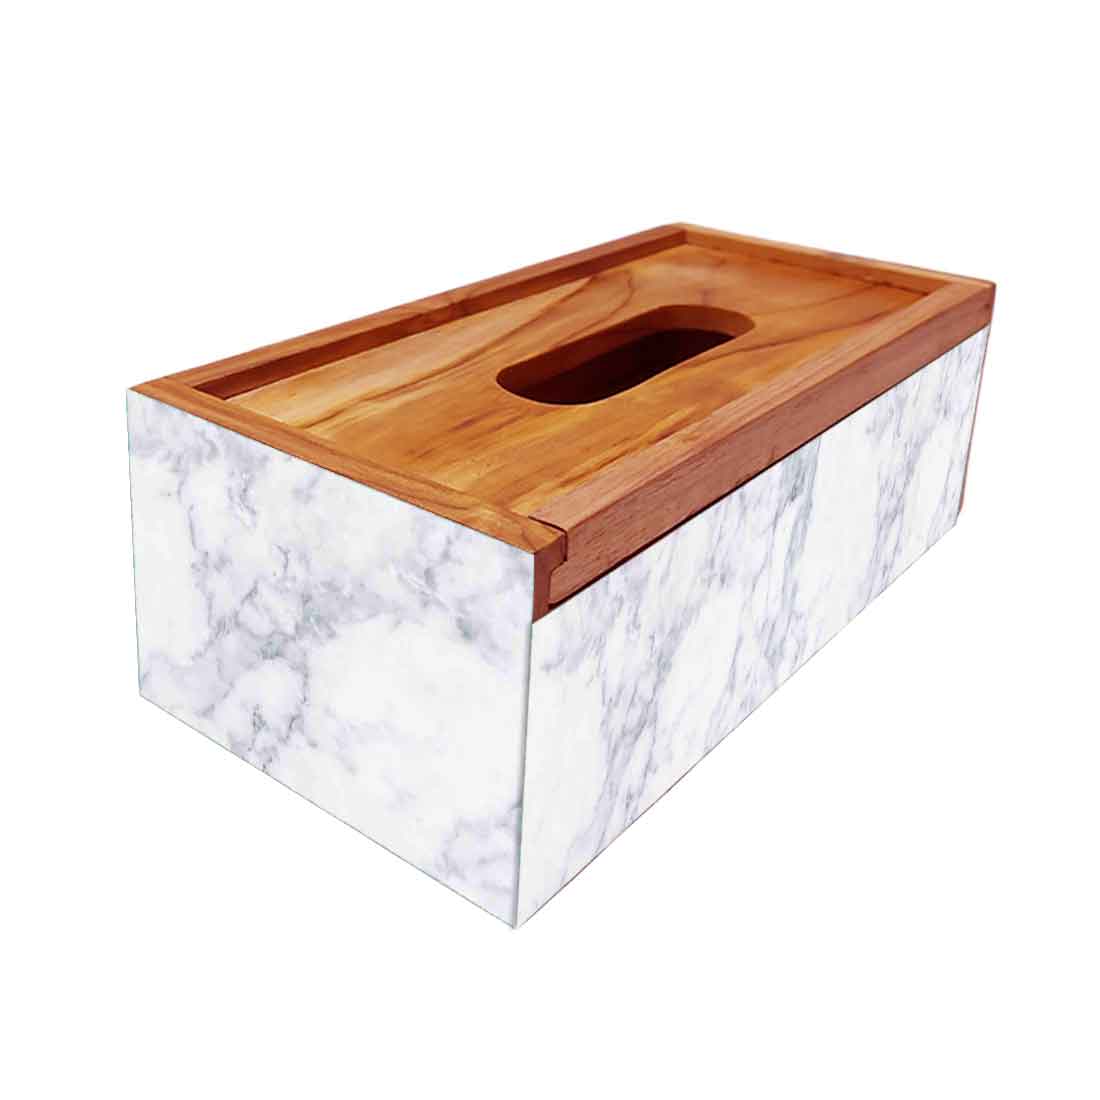 Wooden Tissue Box Cover Holder for Office Car - White Marble